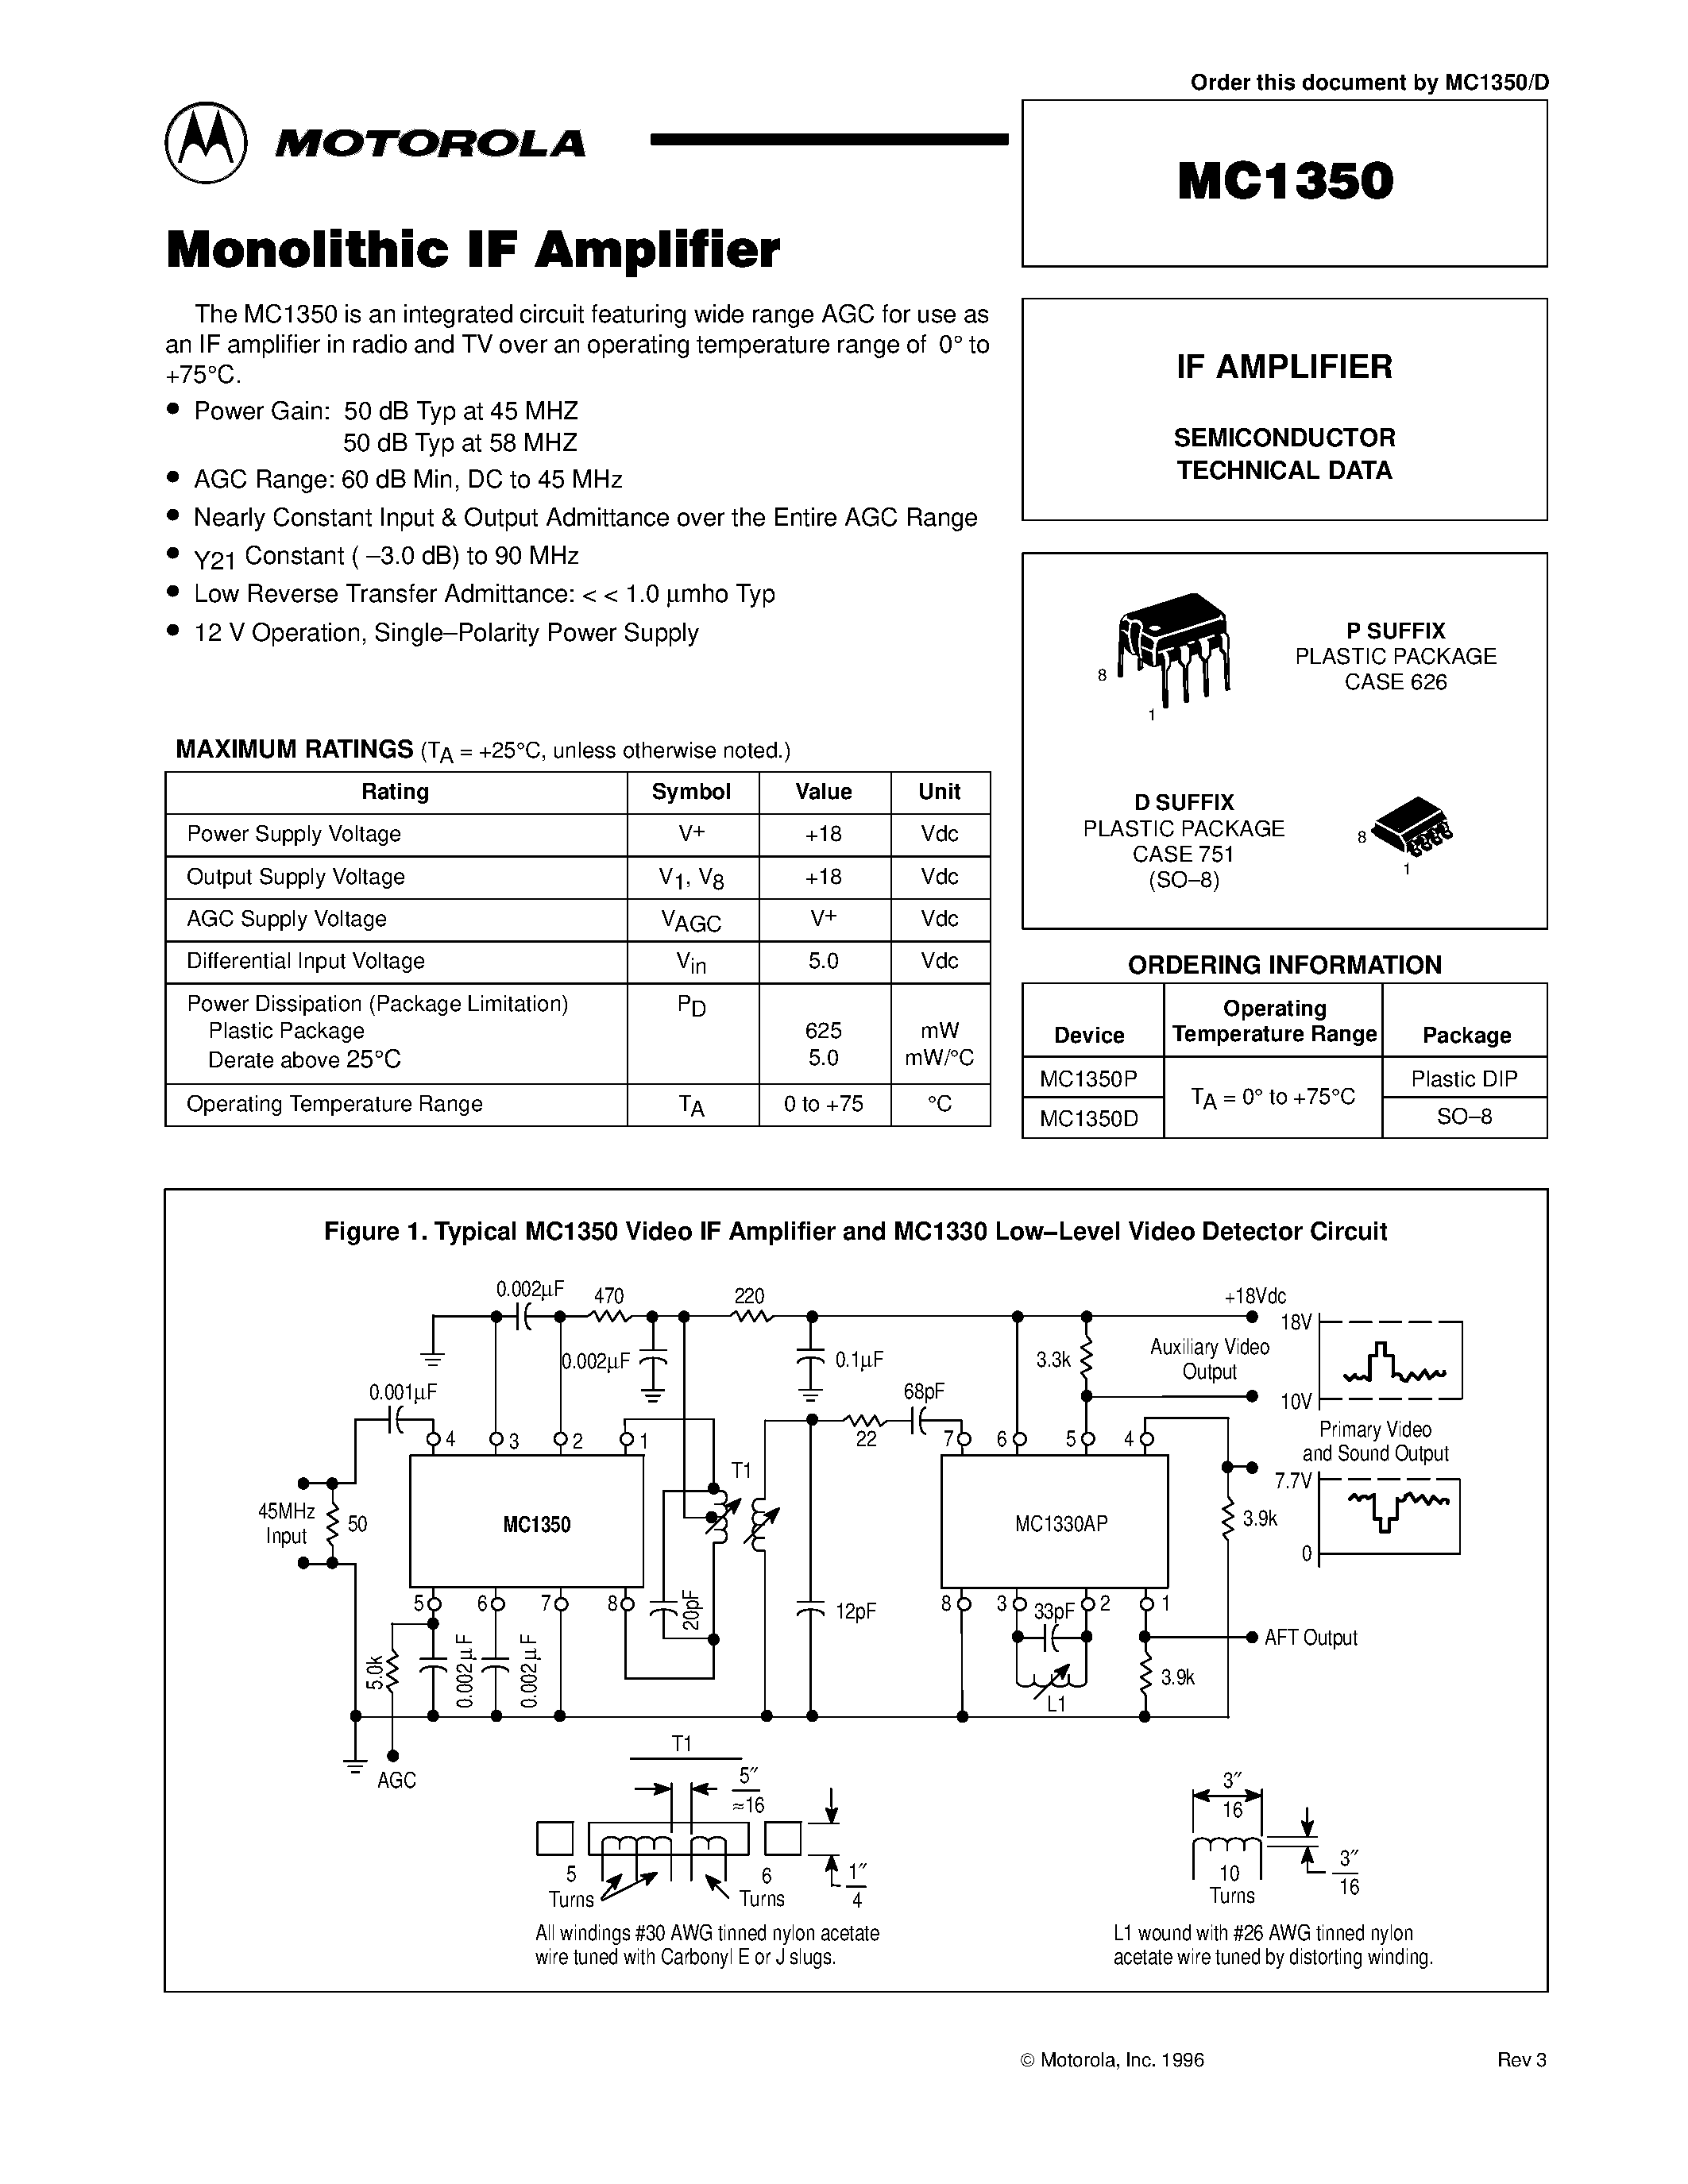 Datasheet MC1350 - IF AMPLIFIER page 1